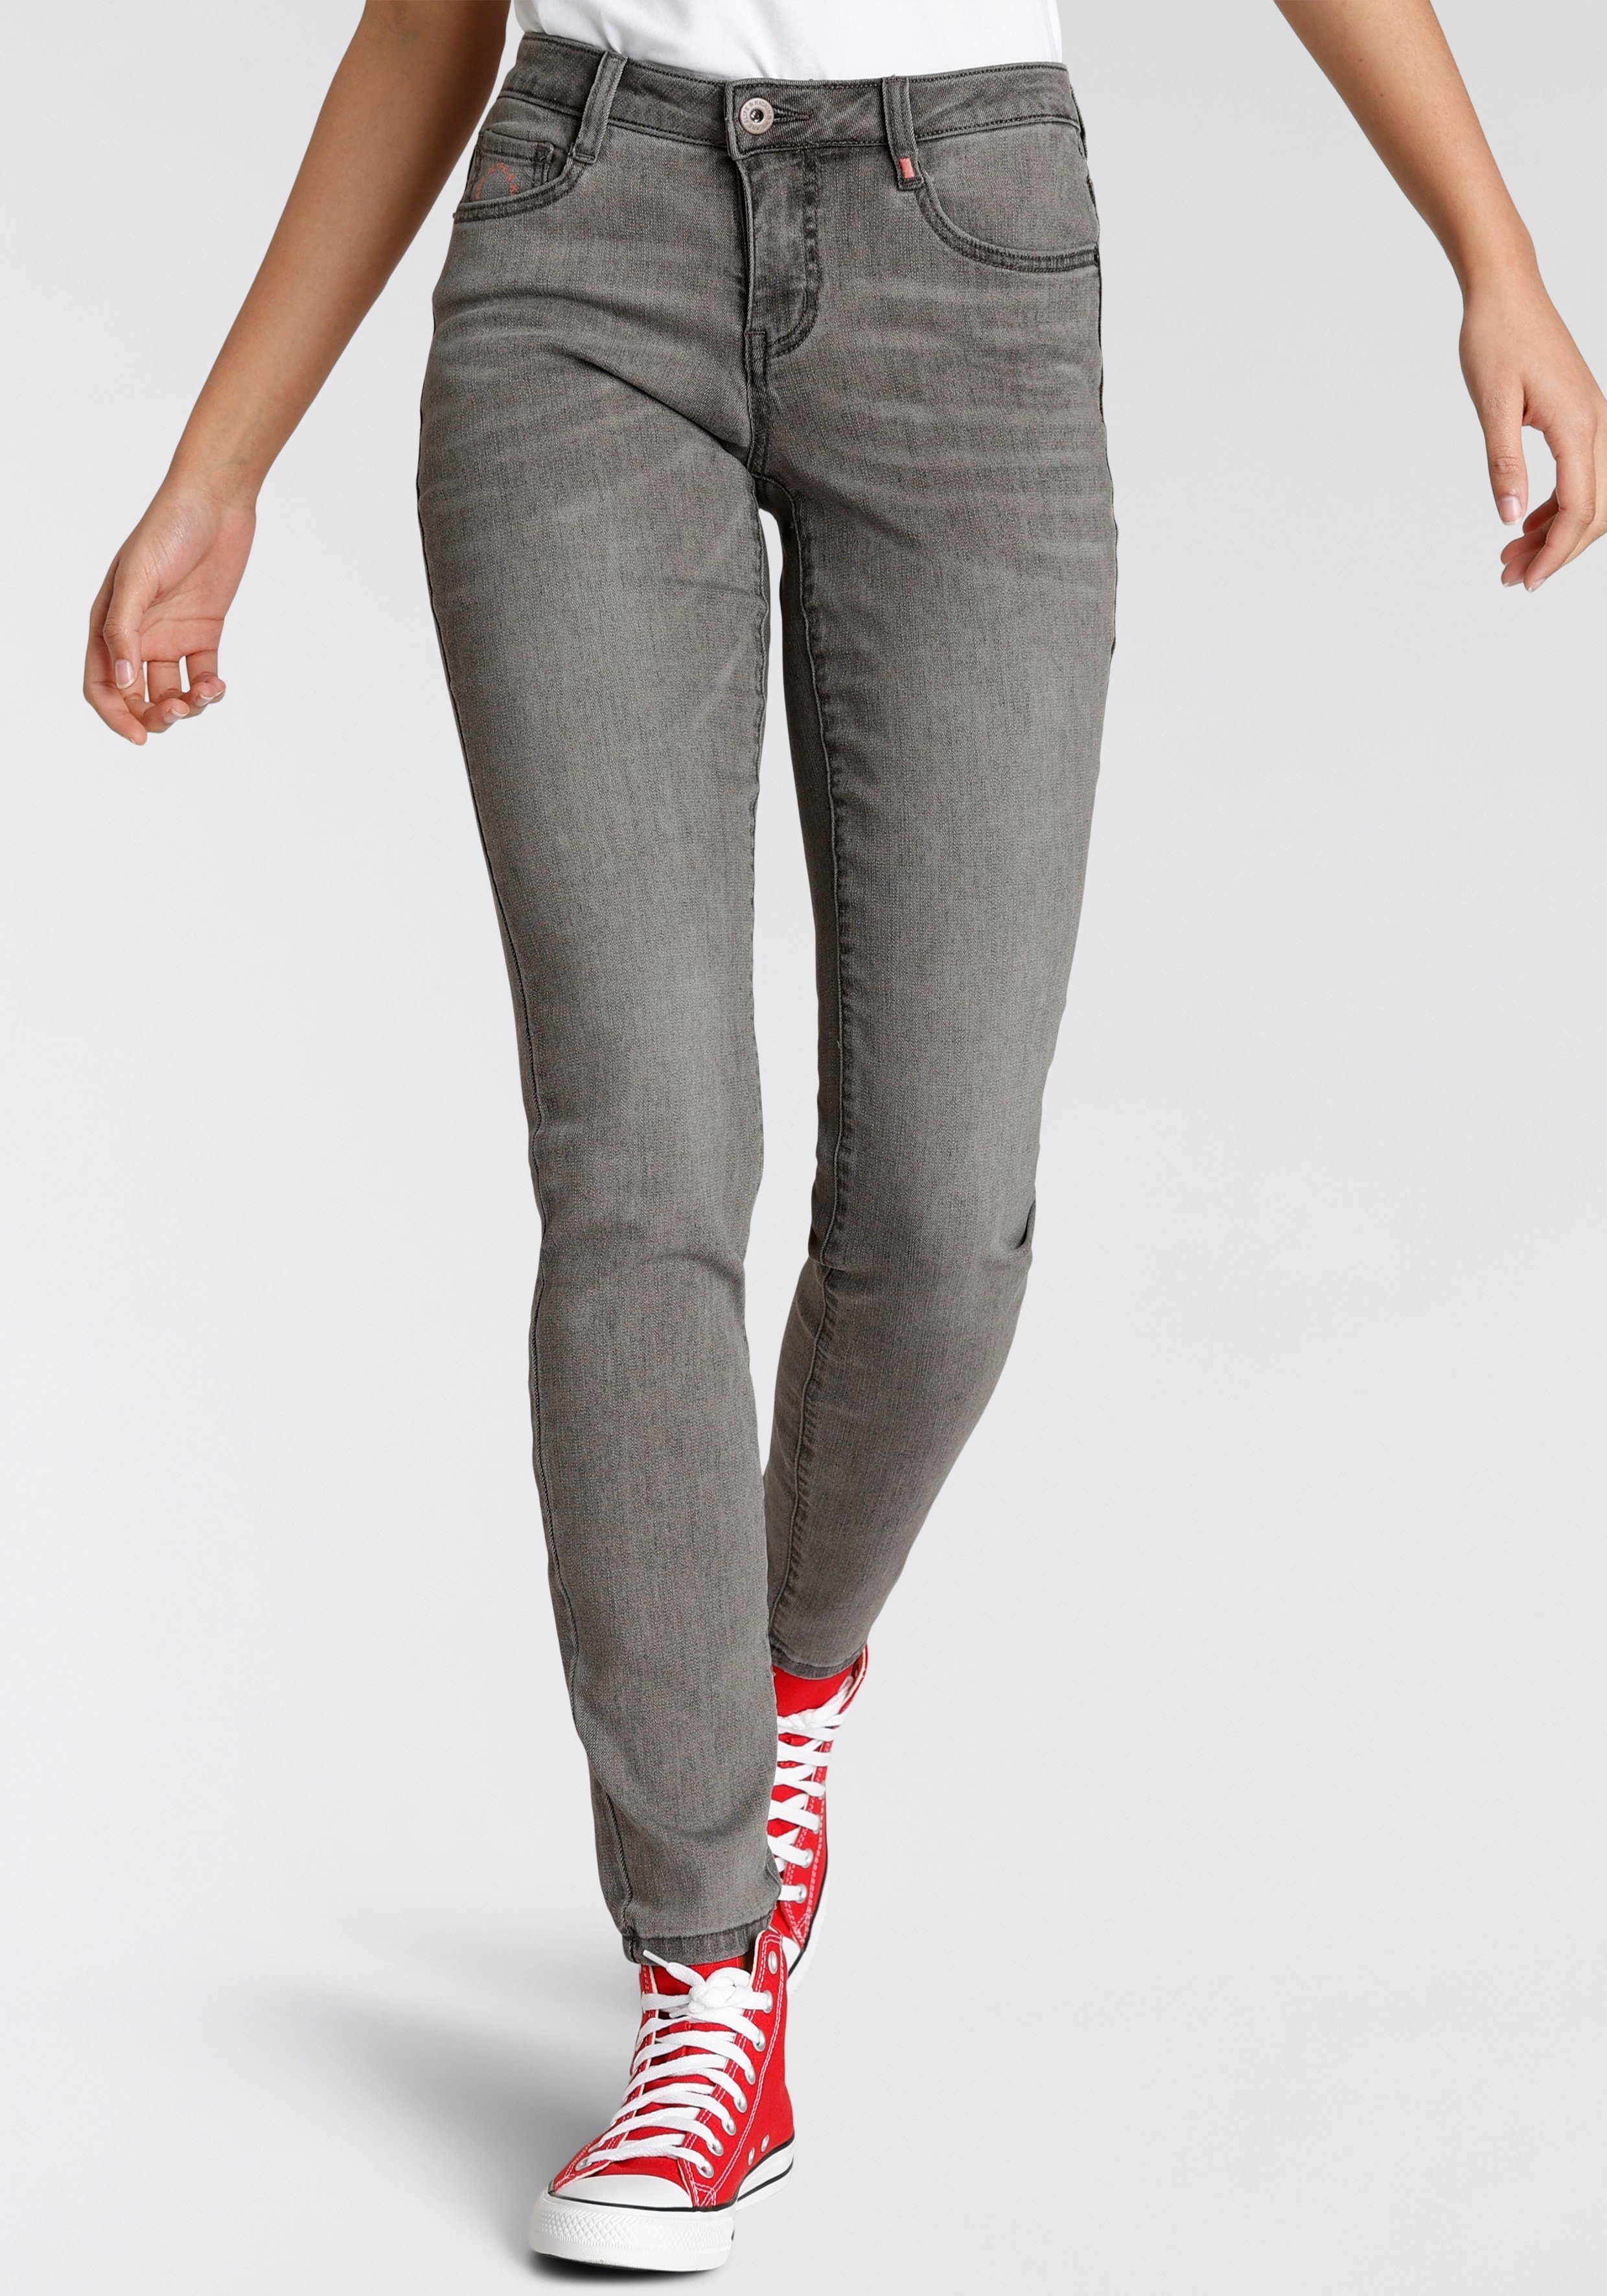 KOLLEKTION NolaAK NEUE Low-rise-Jeans grey used Kickin & Alife